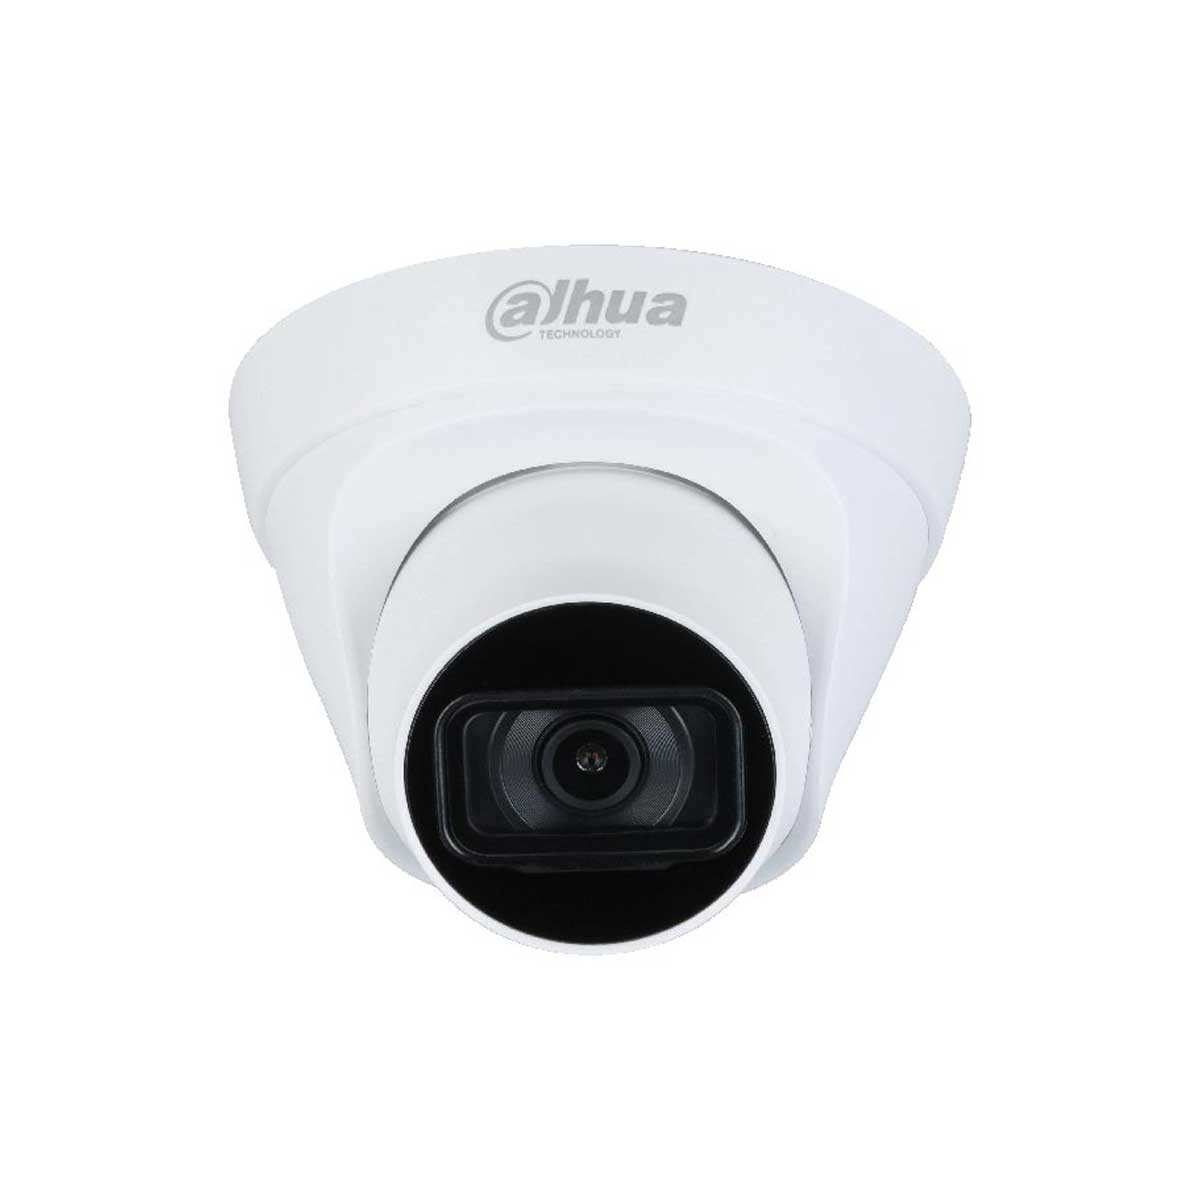  Camera IP dome Dahua DH-IPC-HDW1230T1-S5 2MP,  chuẩn nén H.265 